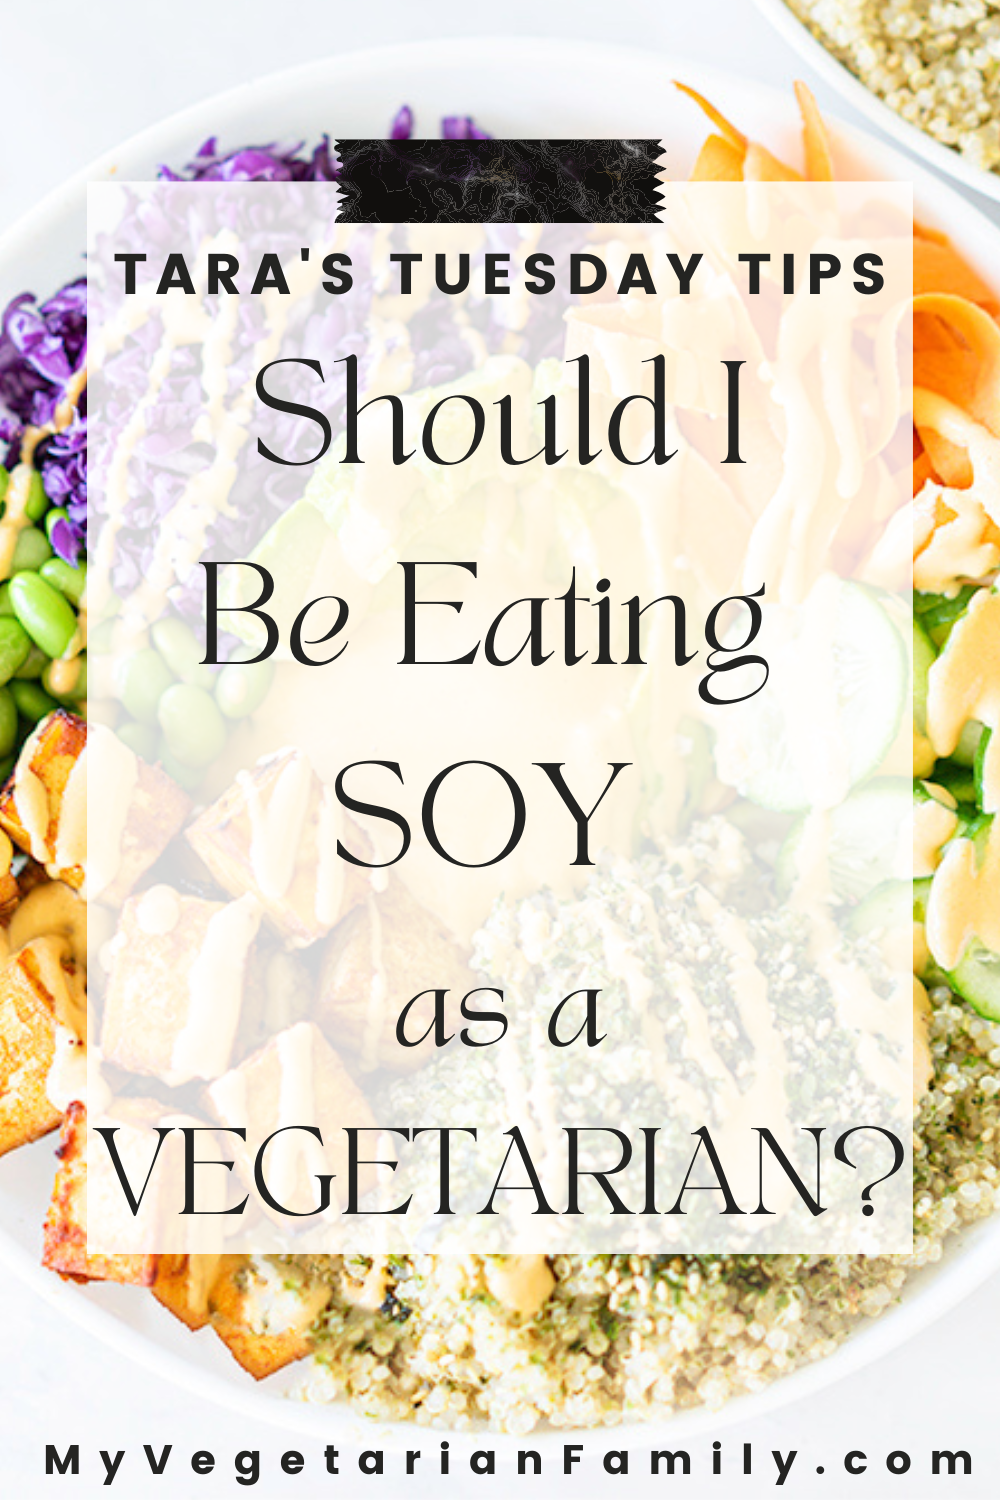 Should I Be Eating Soy as a Vegetarian | My Vegetarian Family | Tara's Tuesday Tips #soynutritiontips #tarastuesdaytips